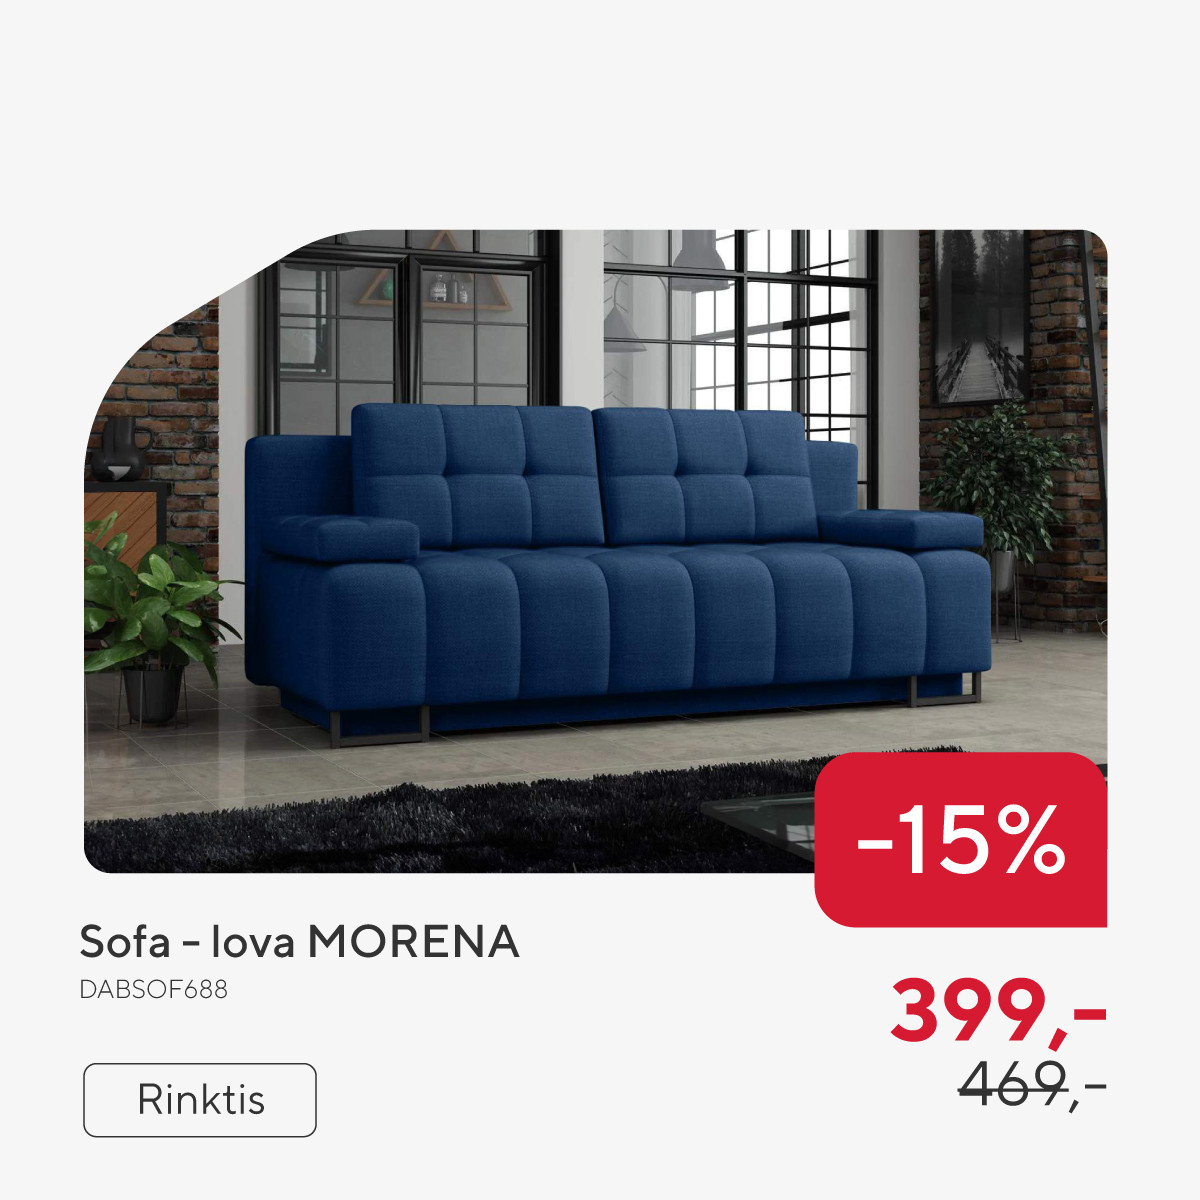 Sofa-lova MORENA